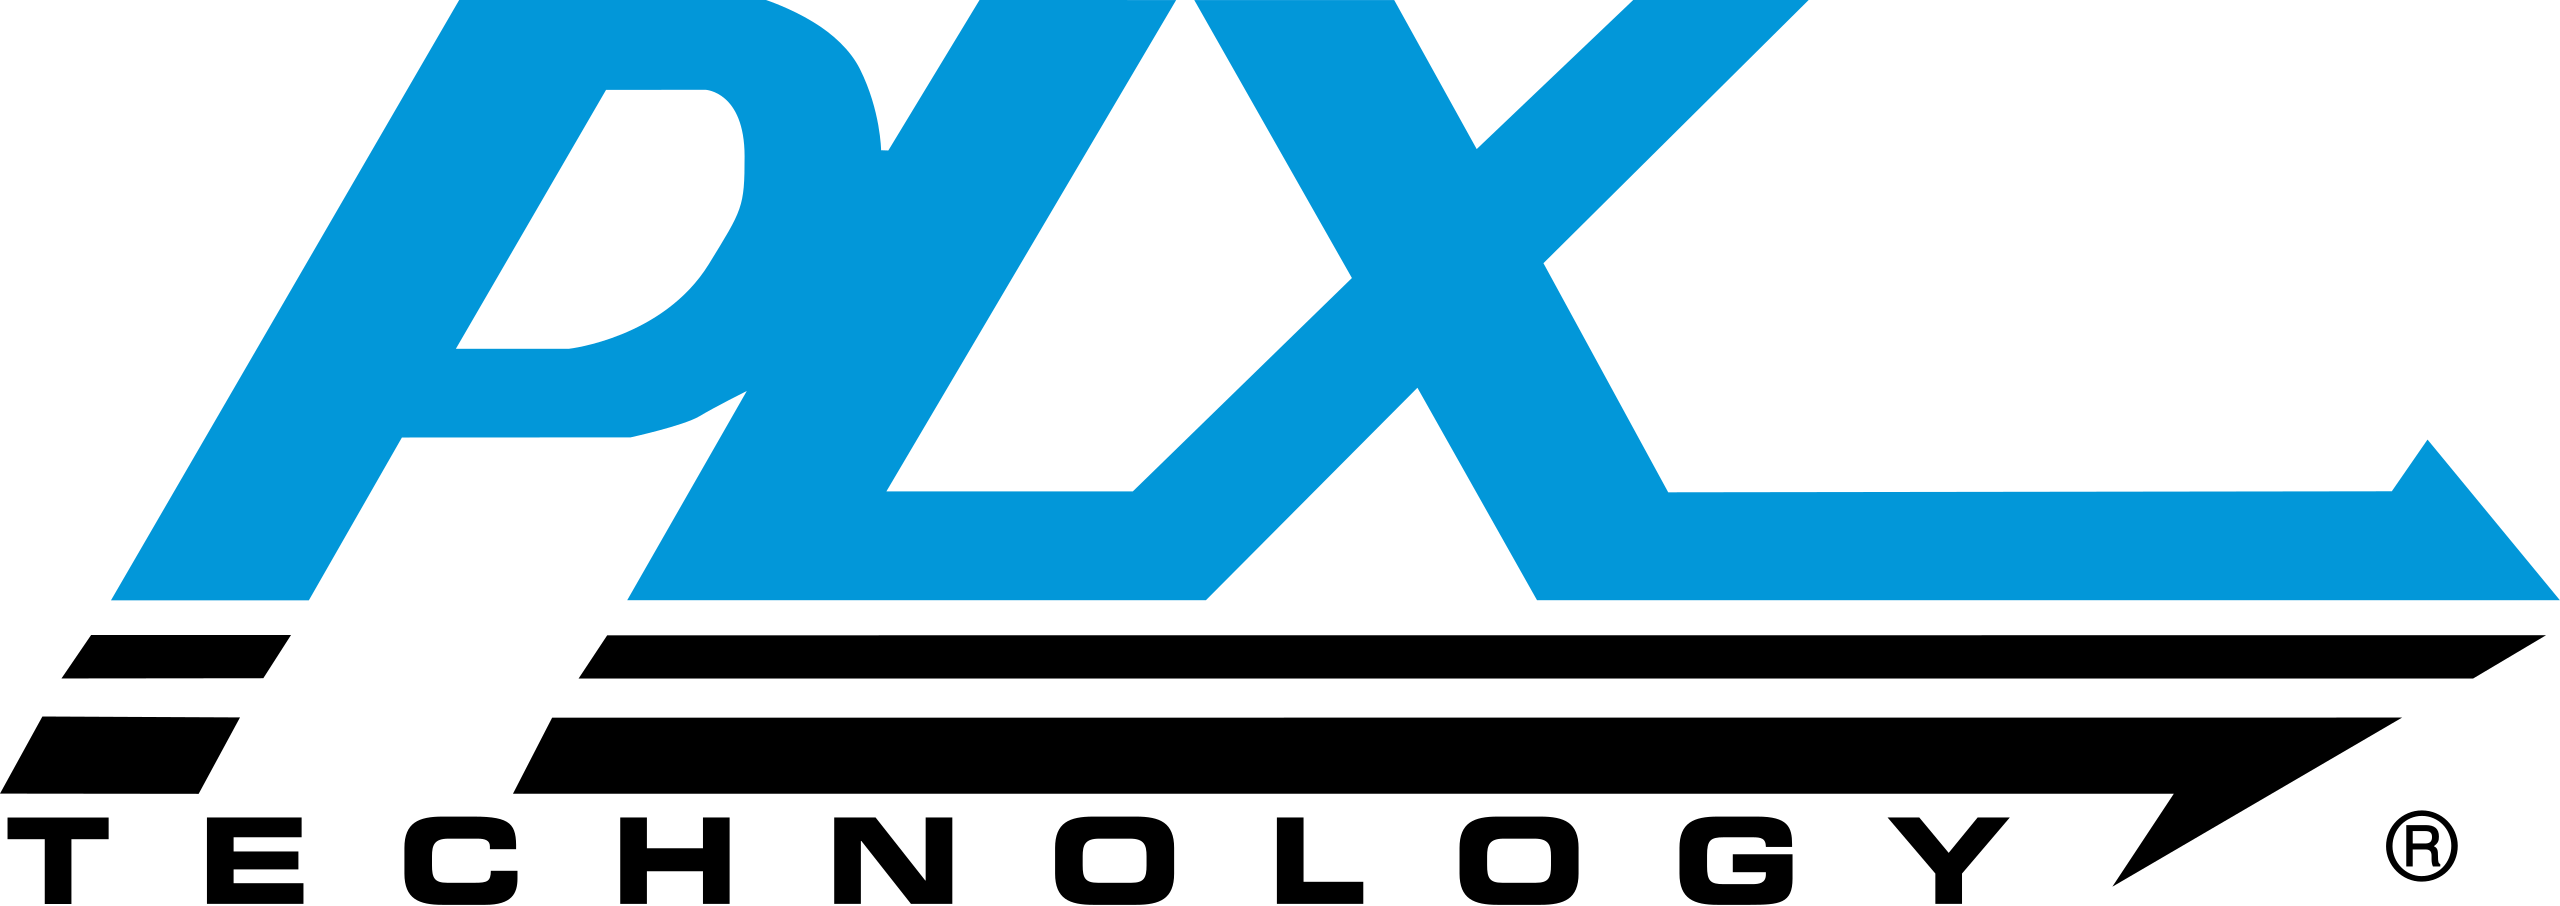 PLX Technology  logo